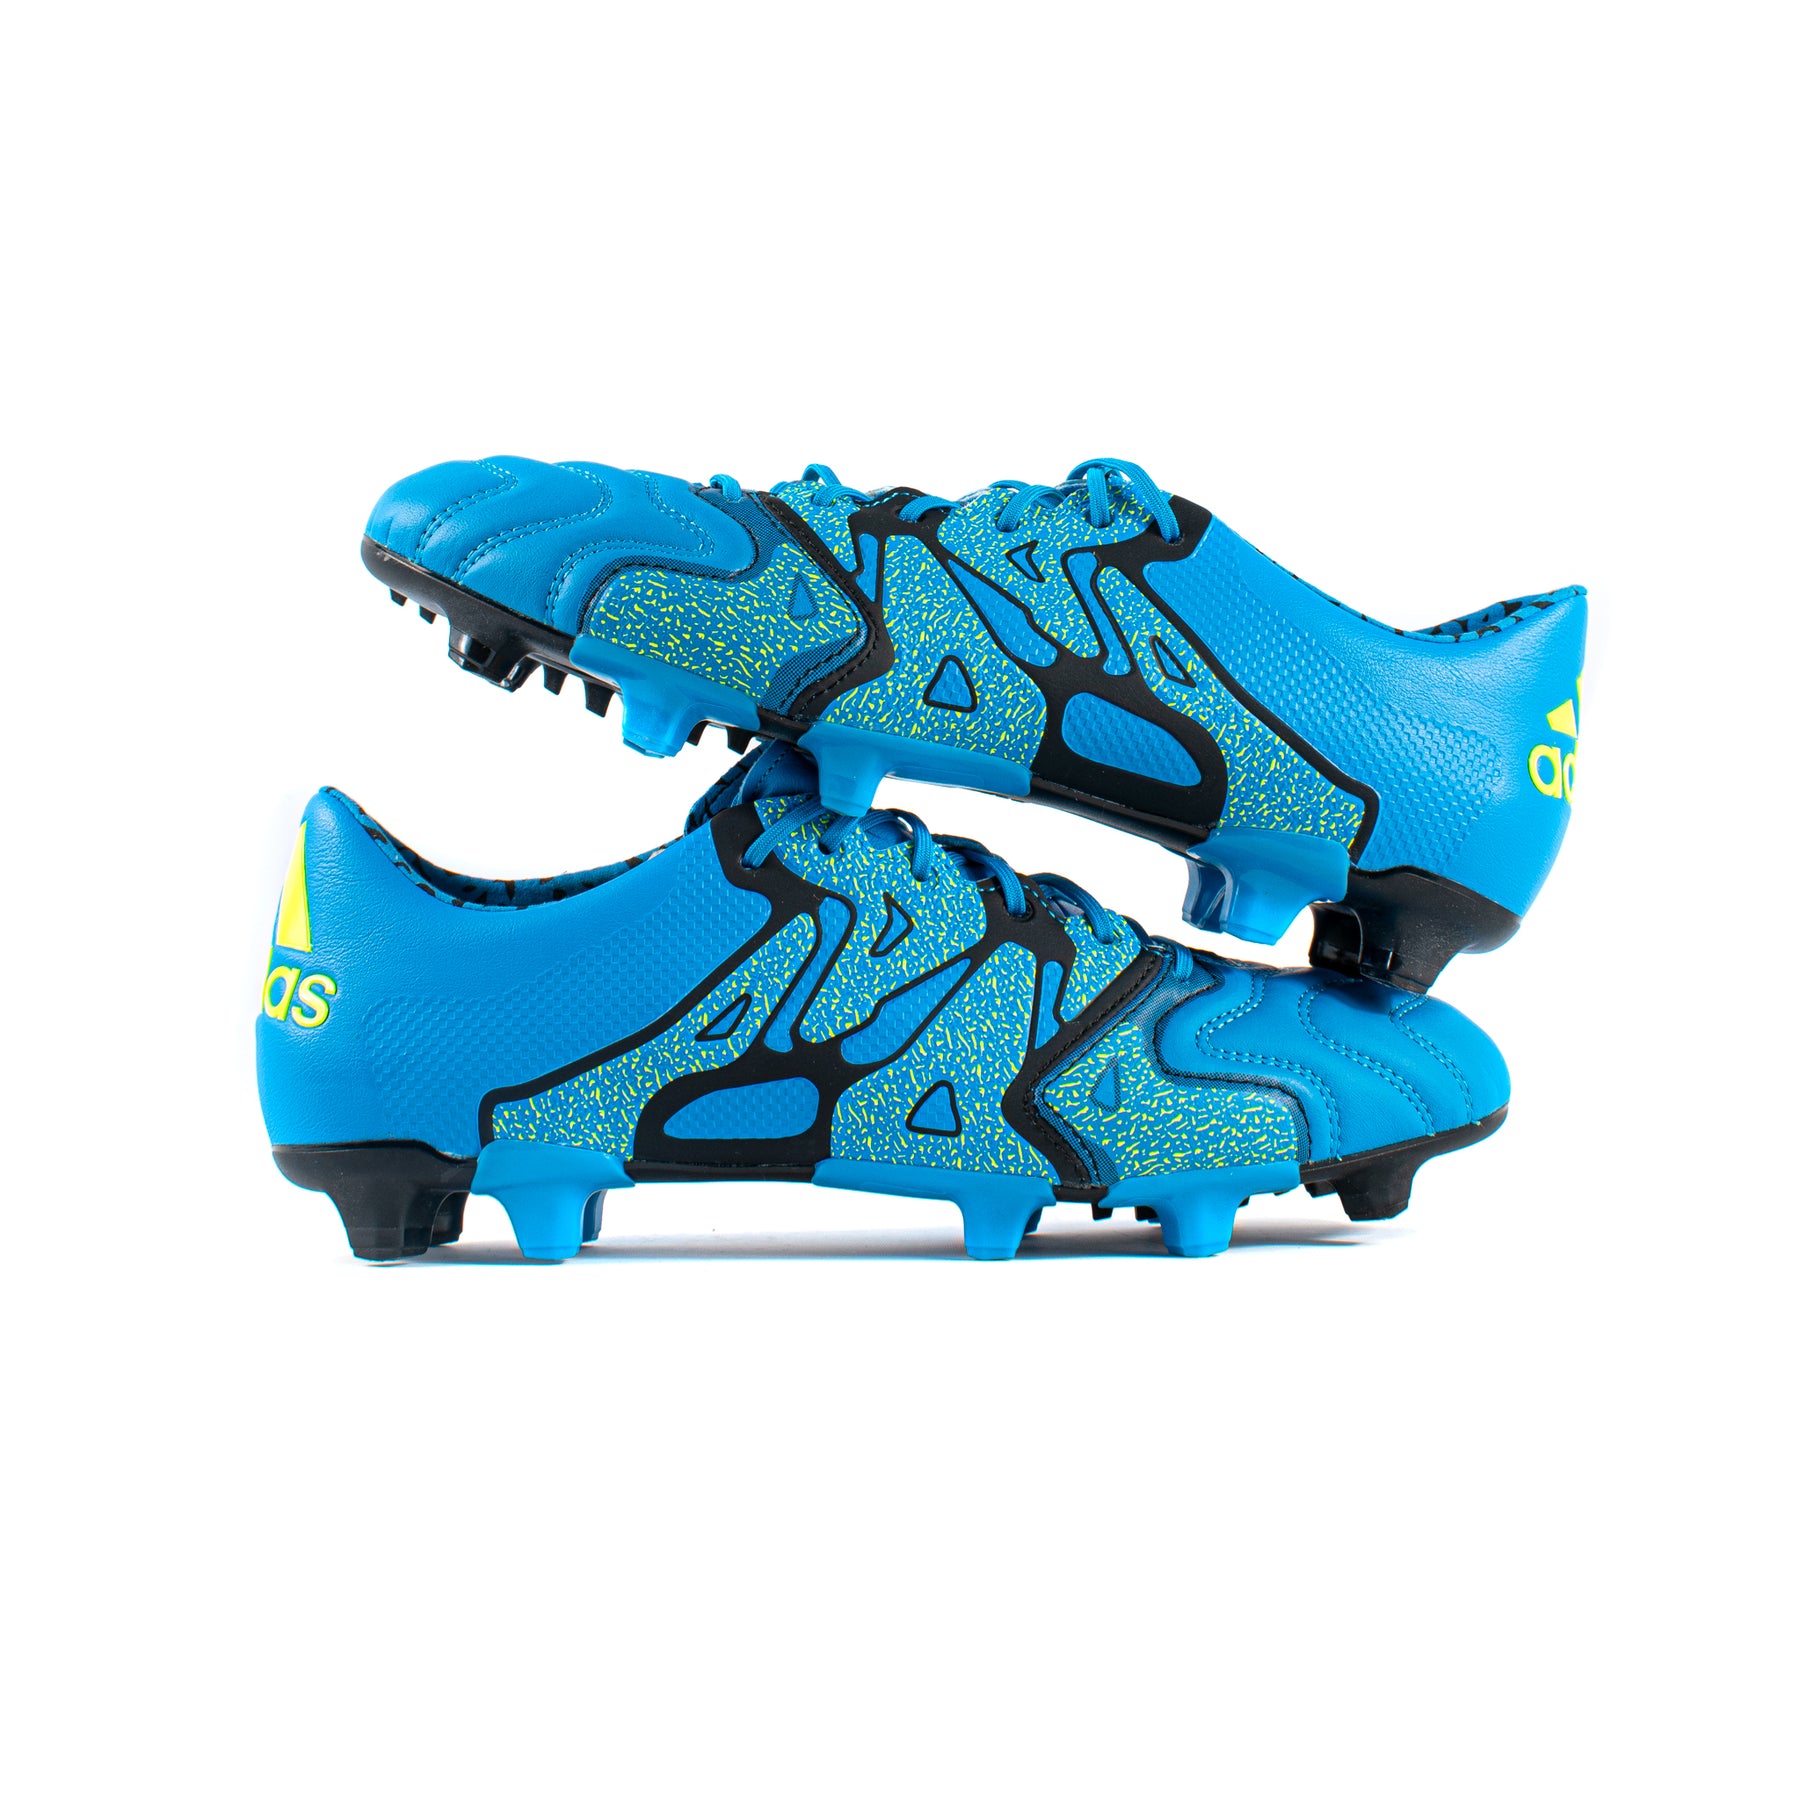 Adidas X15.1 Blue – Classic Soccer Cleats